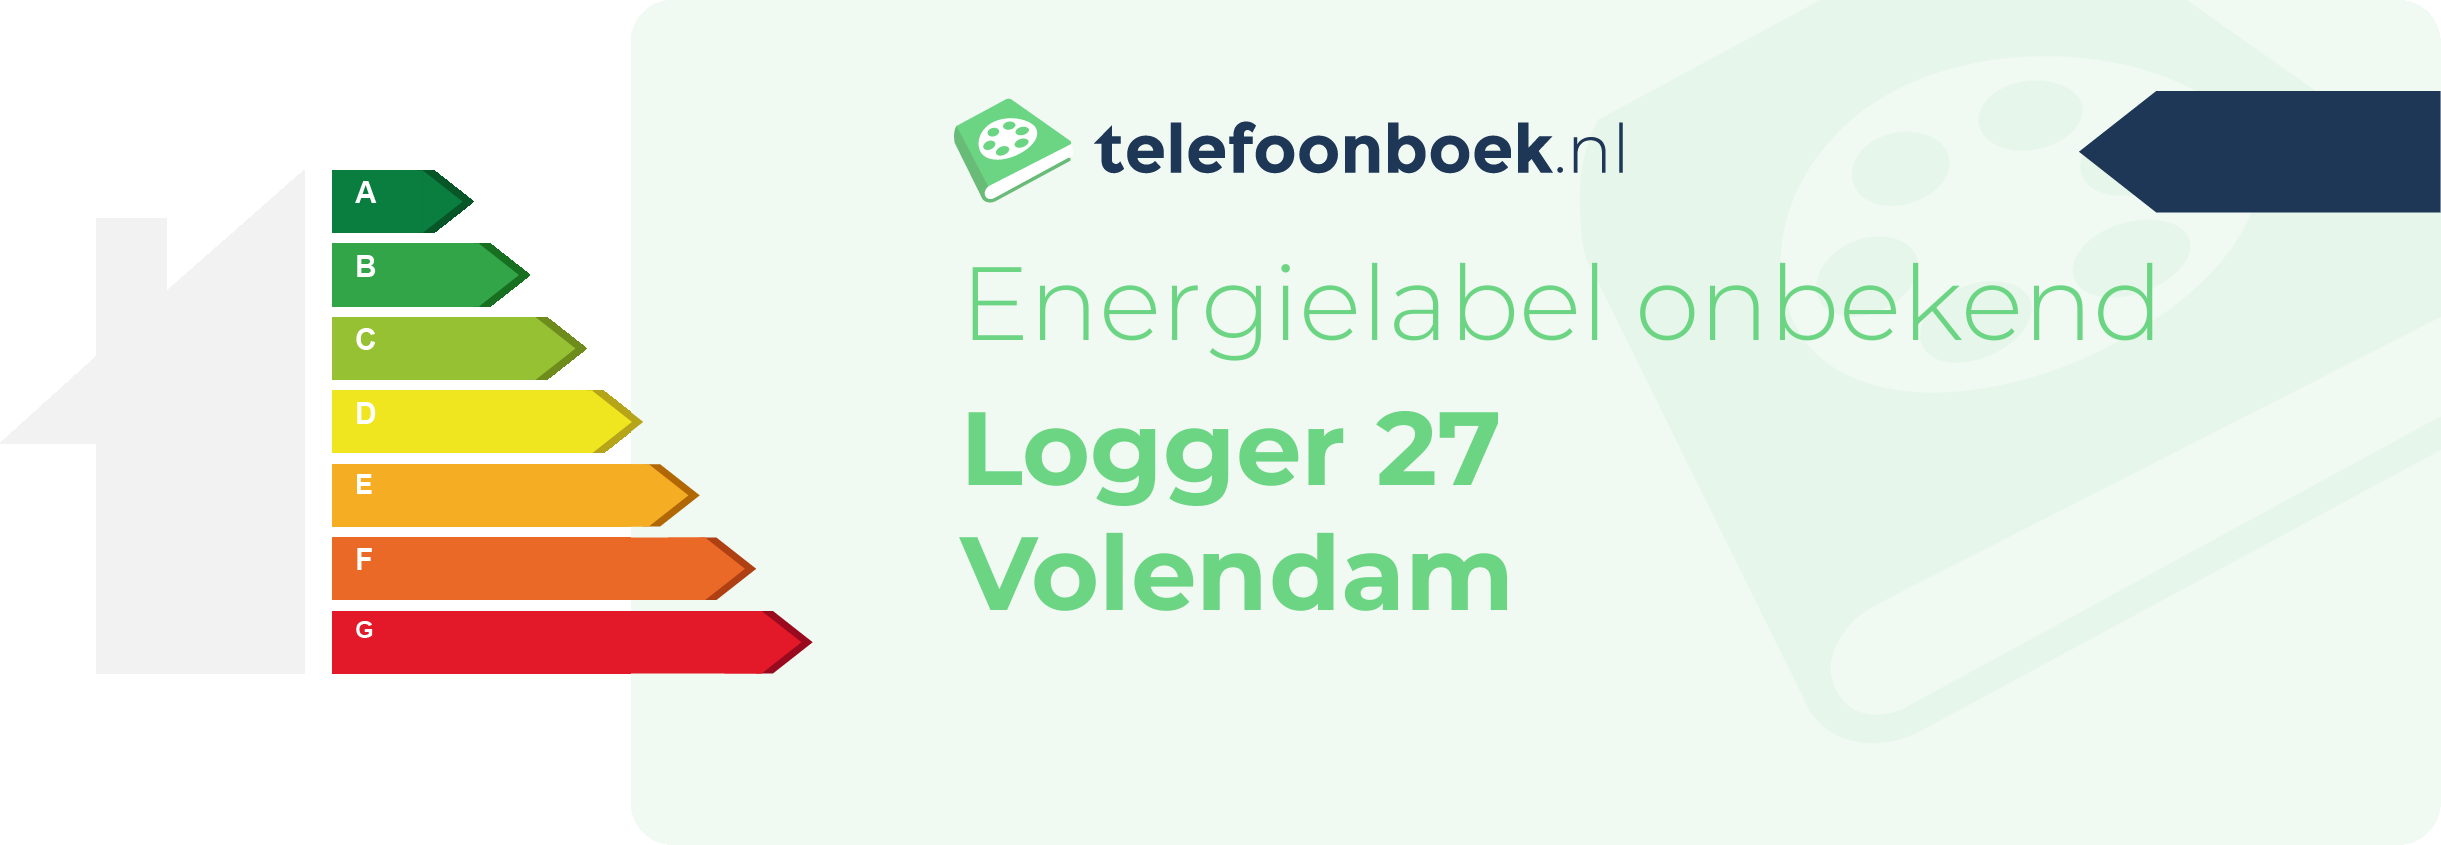 Energielabel Logger 27 Volendam